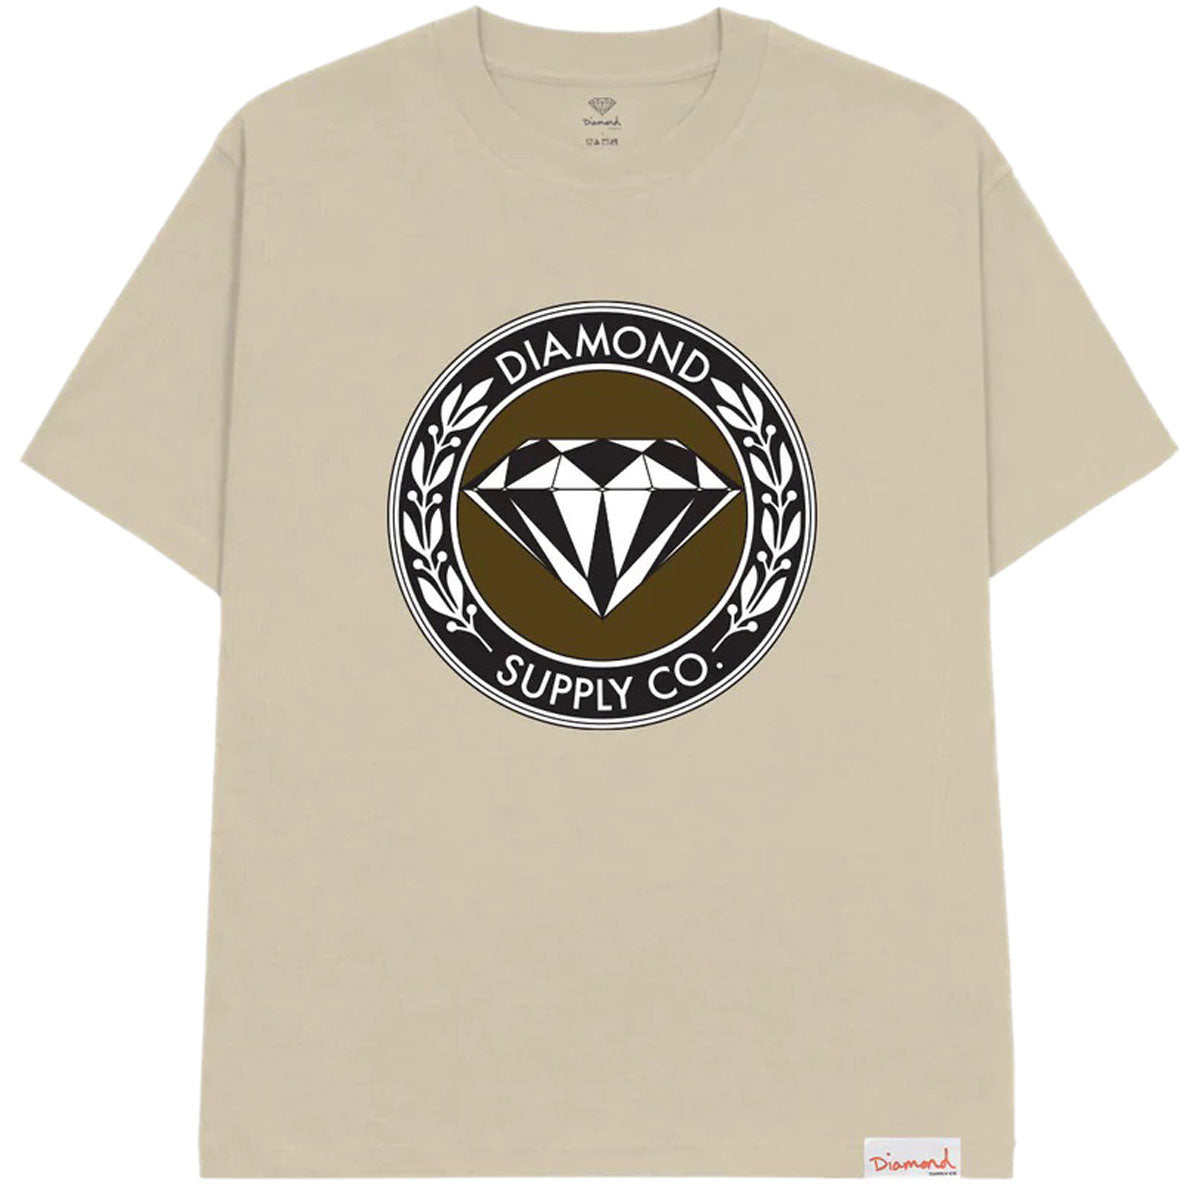 Diamond Supply Co. G-class T-Shirt - Cream image 1